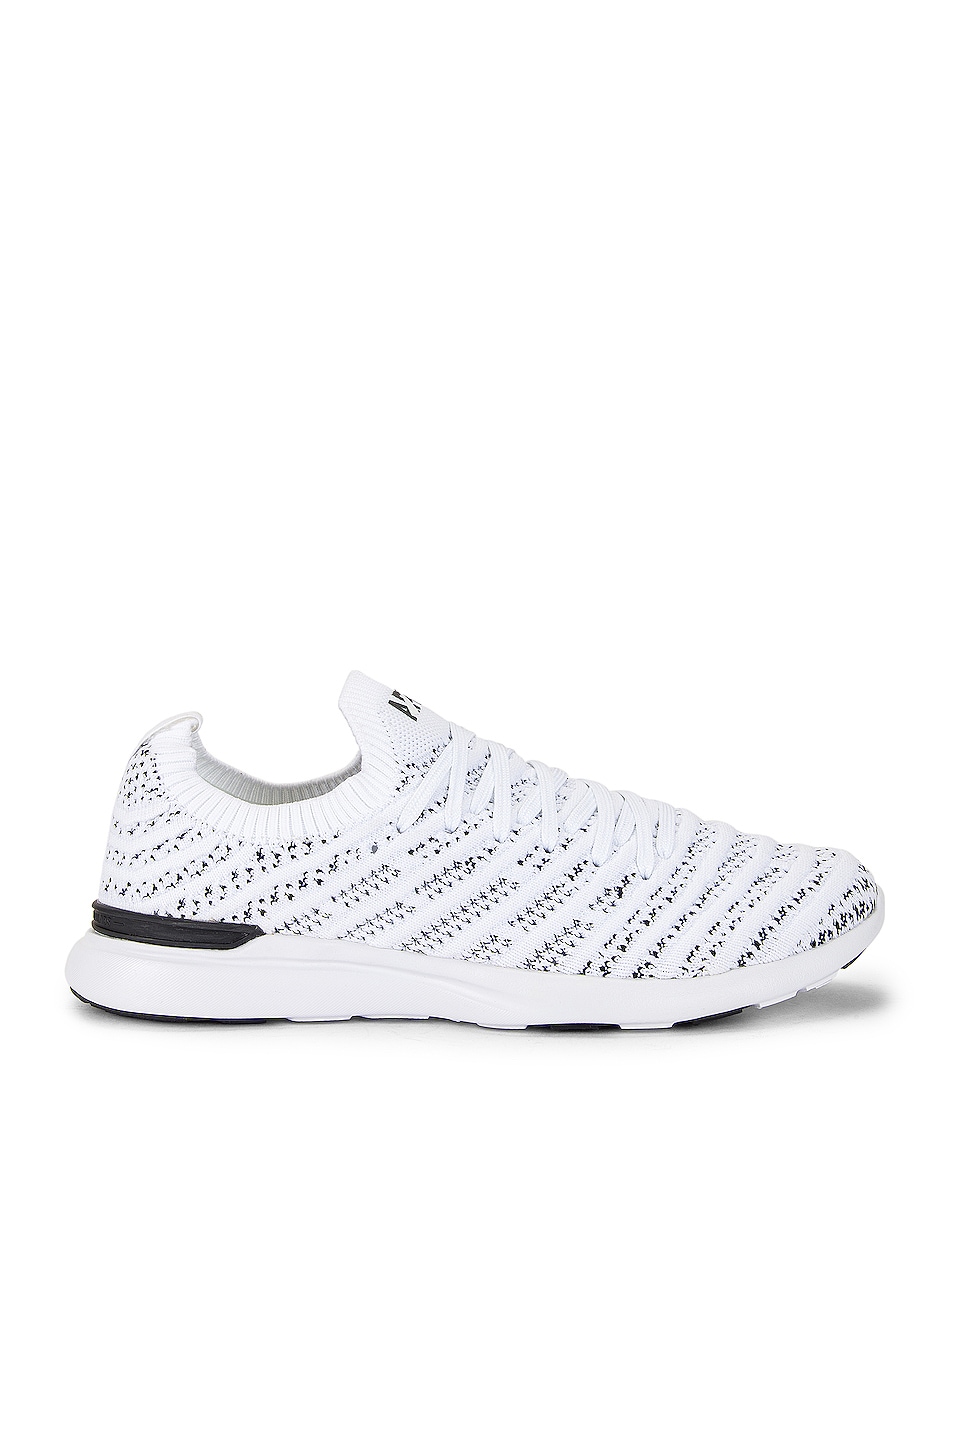 Image 1 of APL: Athletic Propulsion Labs Techloom Wave Sneaker in White & Black